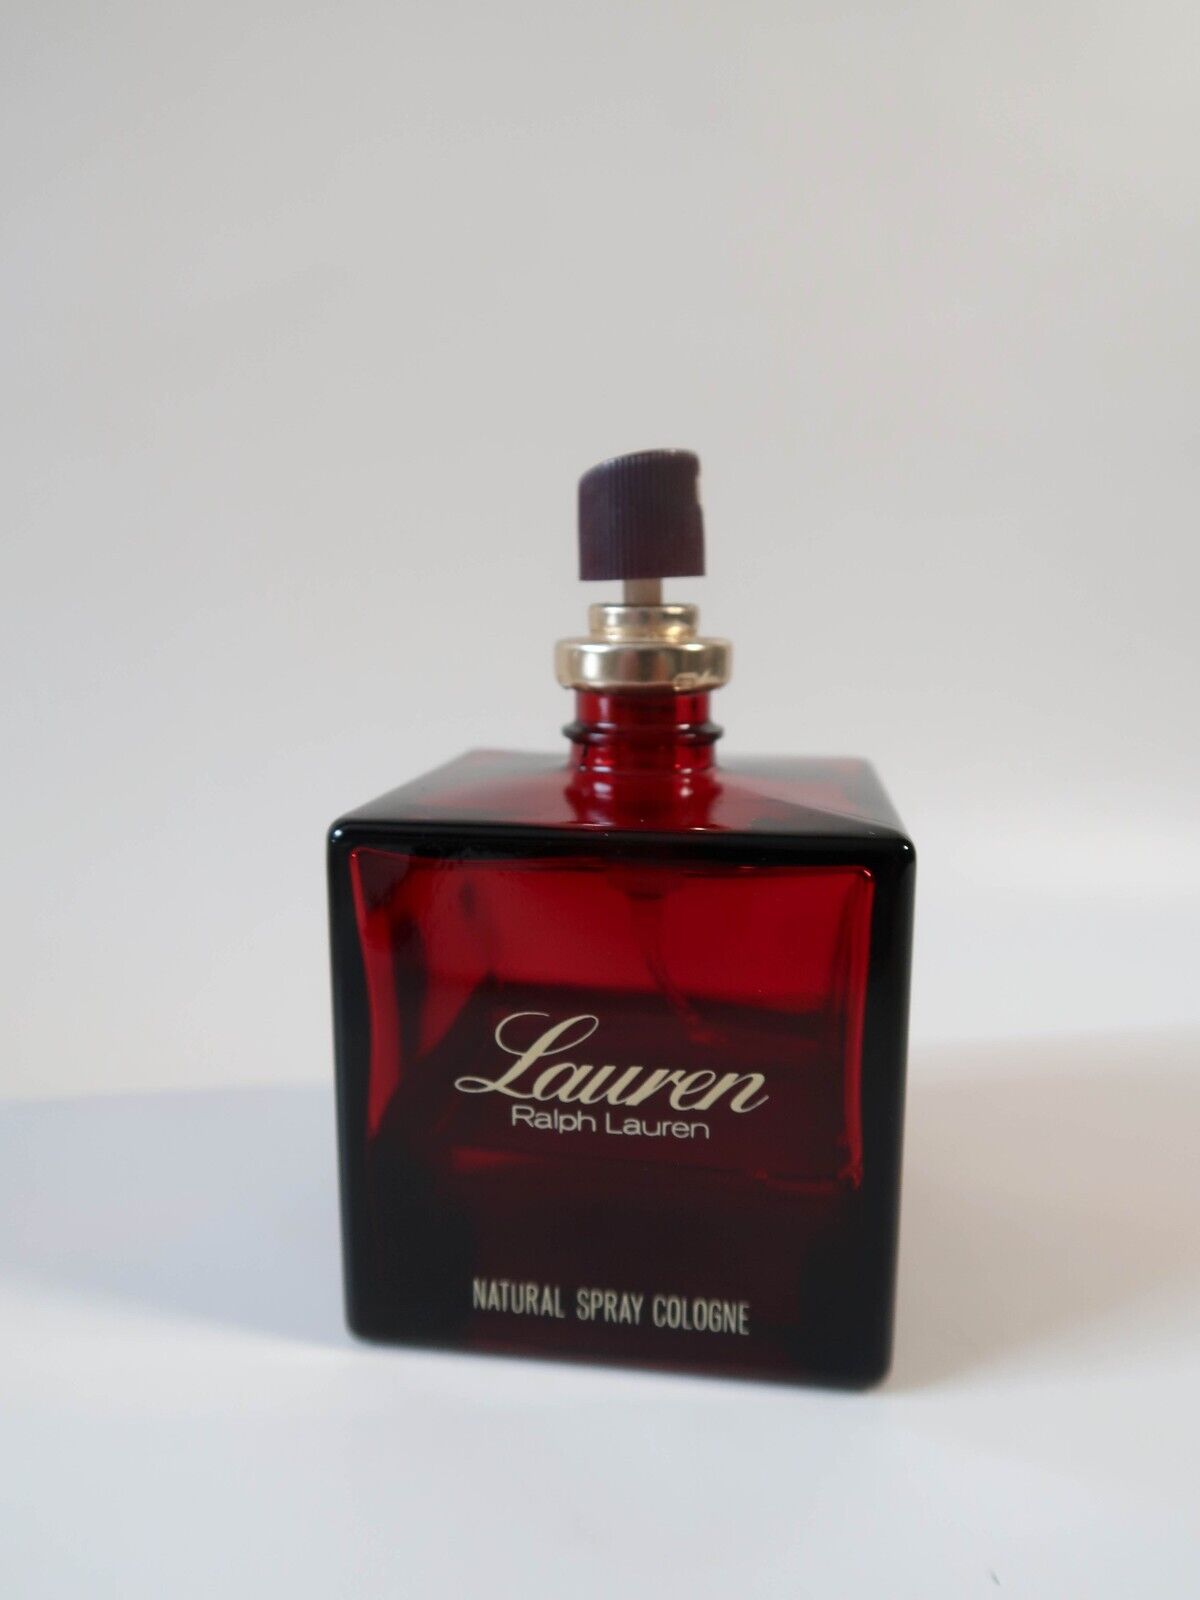 Vintage LAUREN by RALPH LAUREN Natural Spray Cologne Perfume